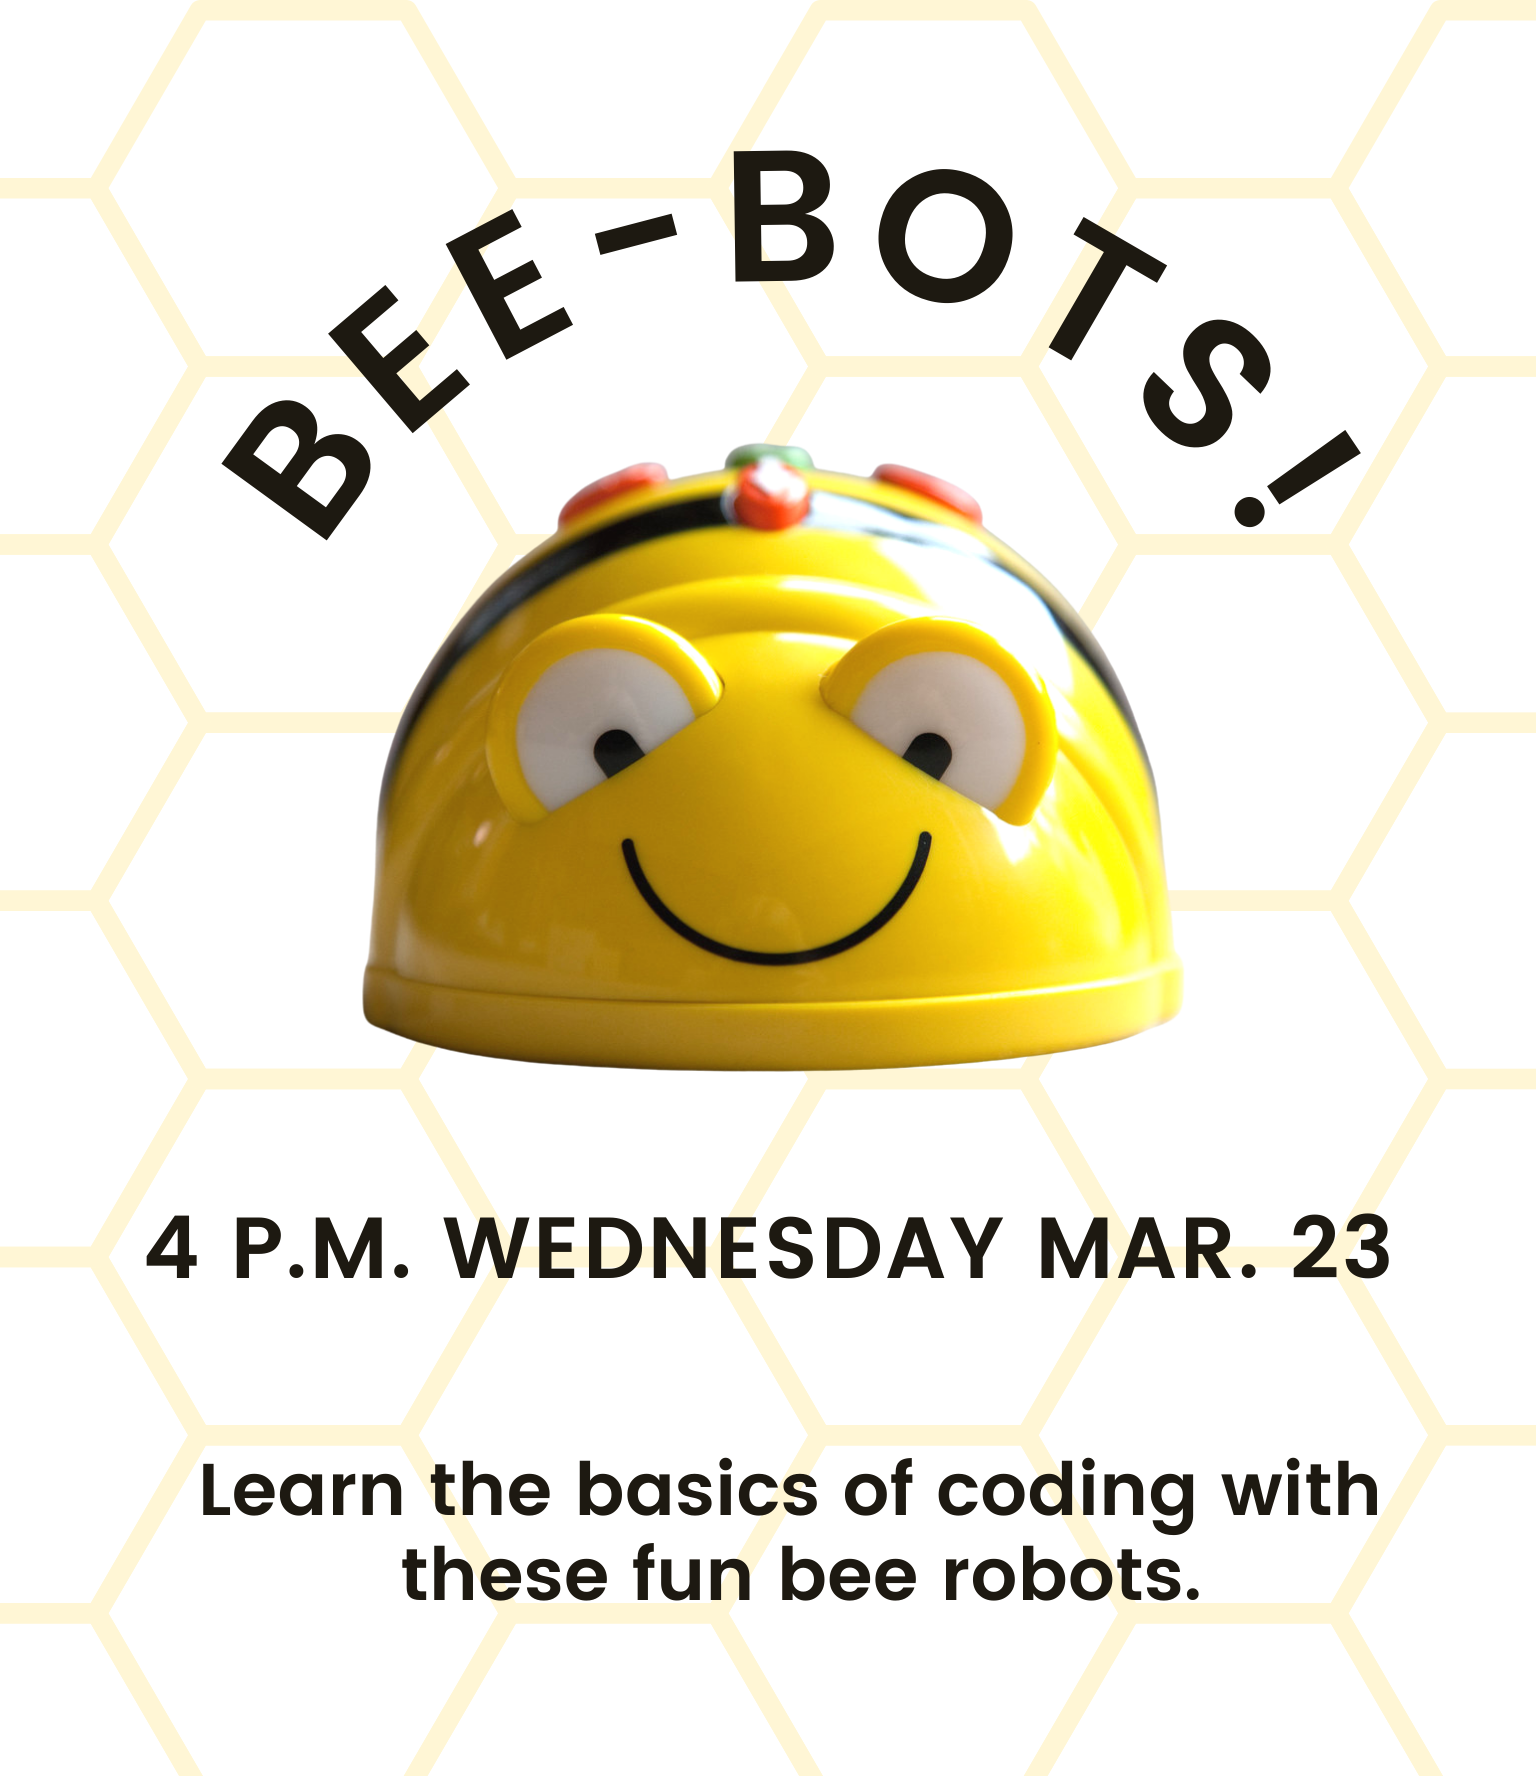 Bee-bots!